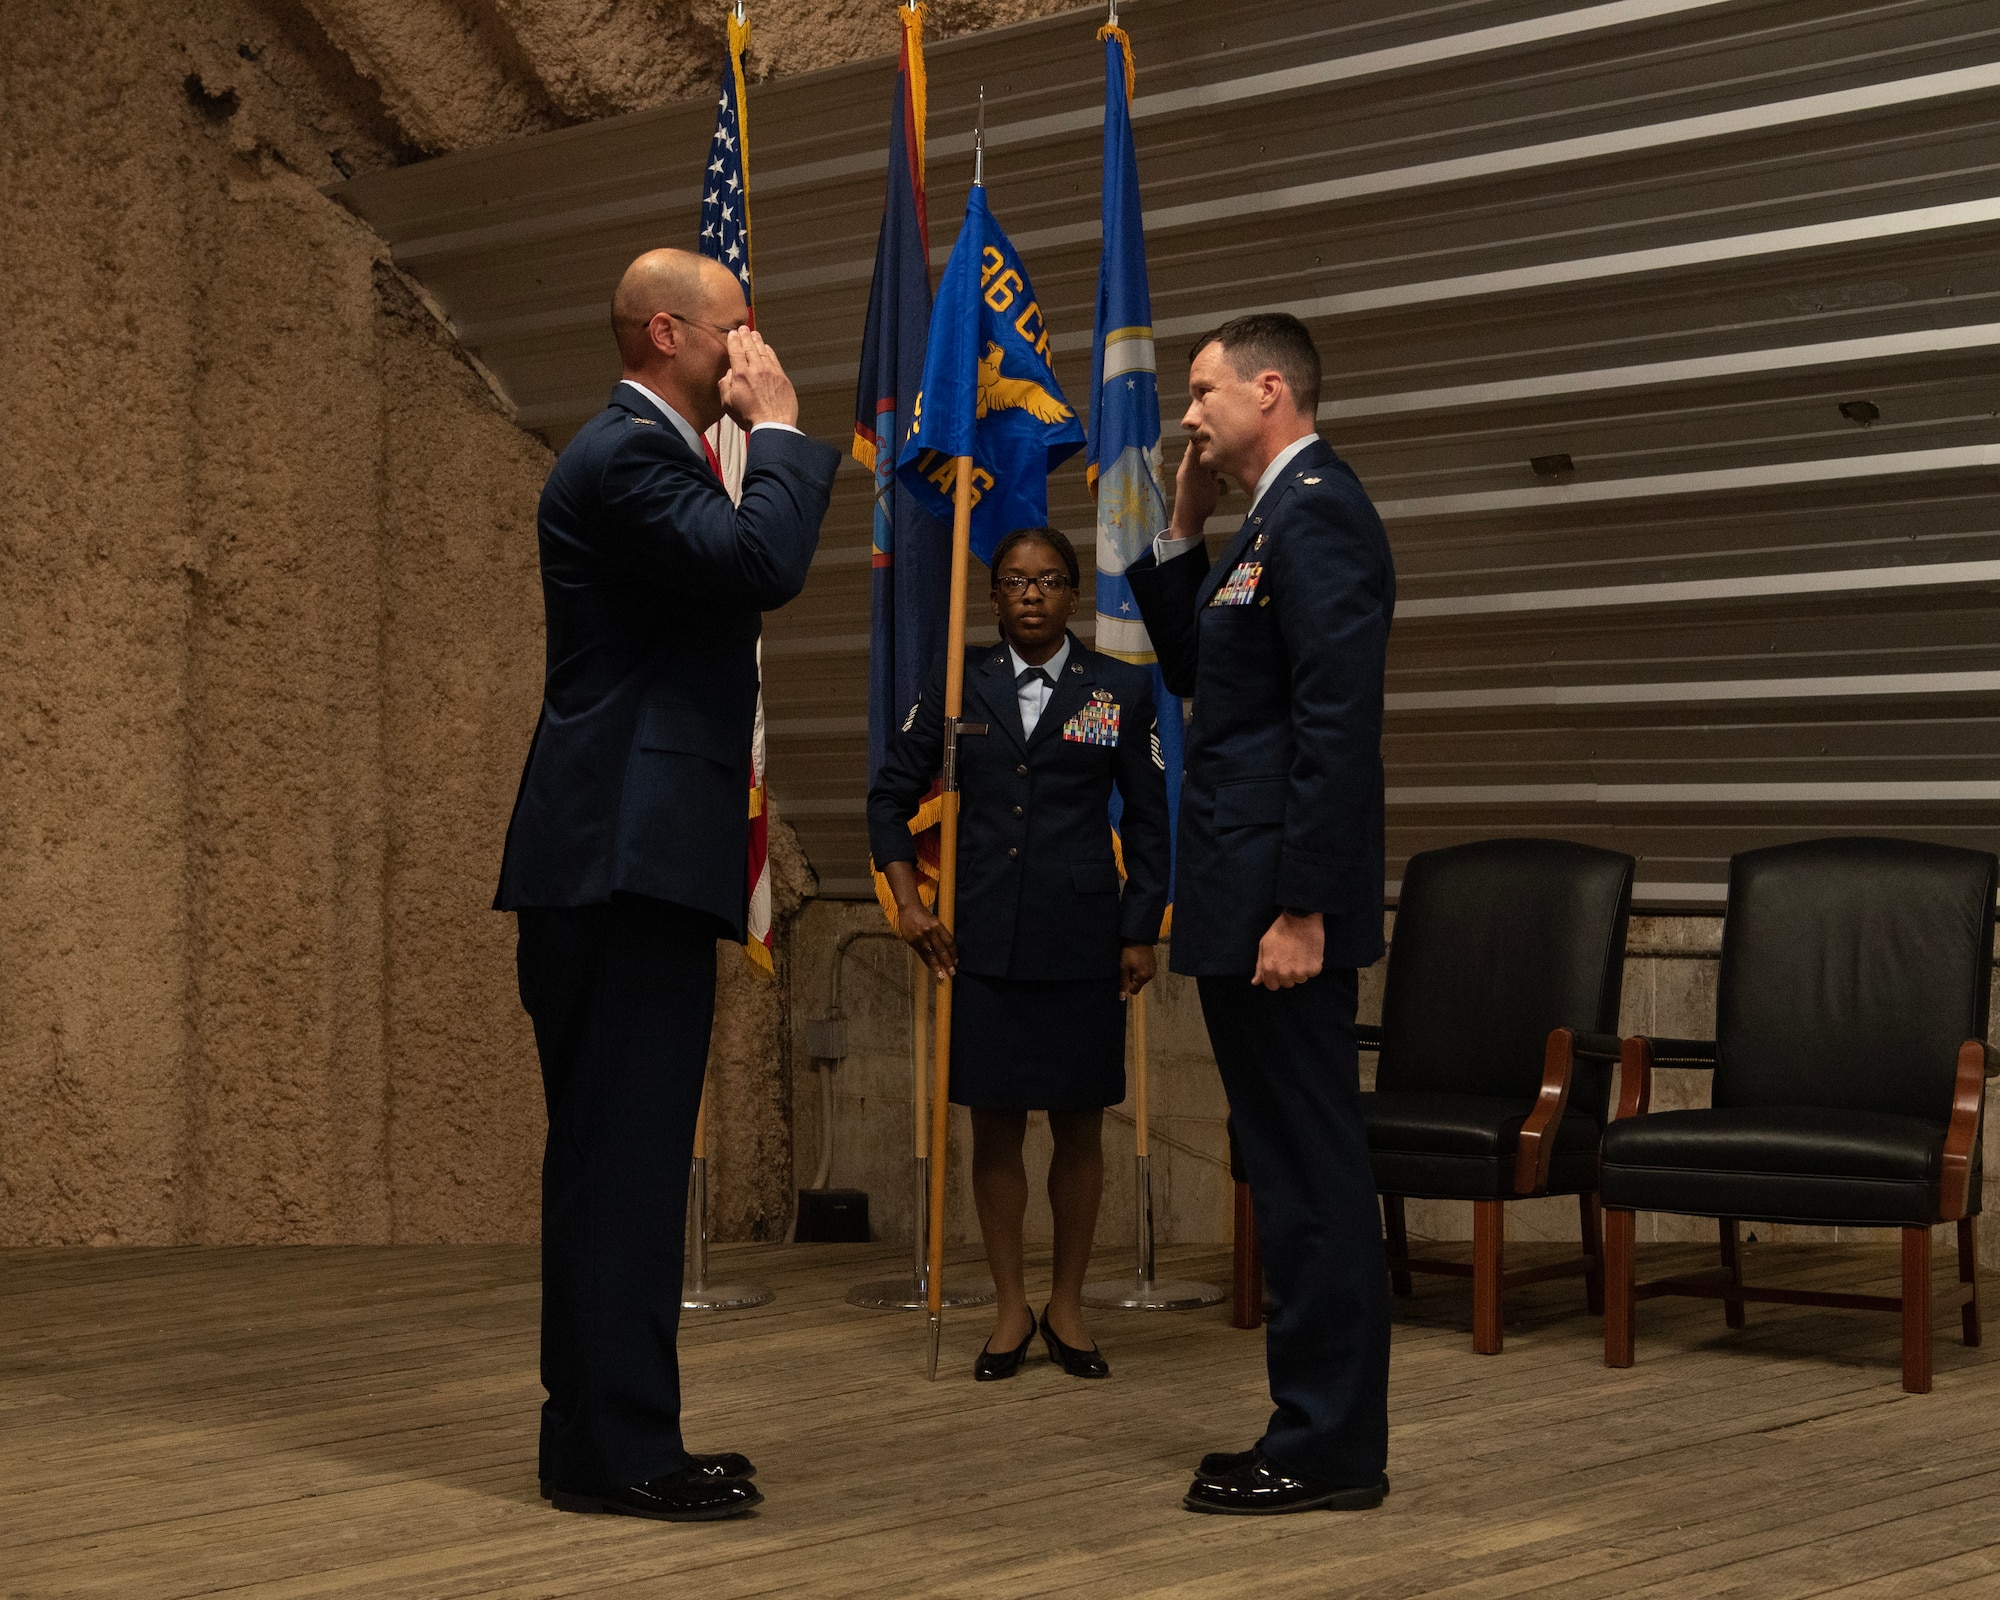 A Lt. Col. salutes a Colonel.